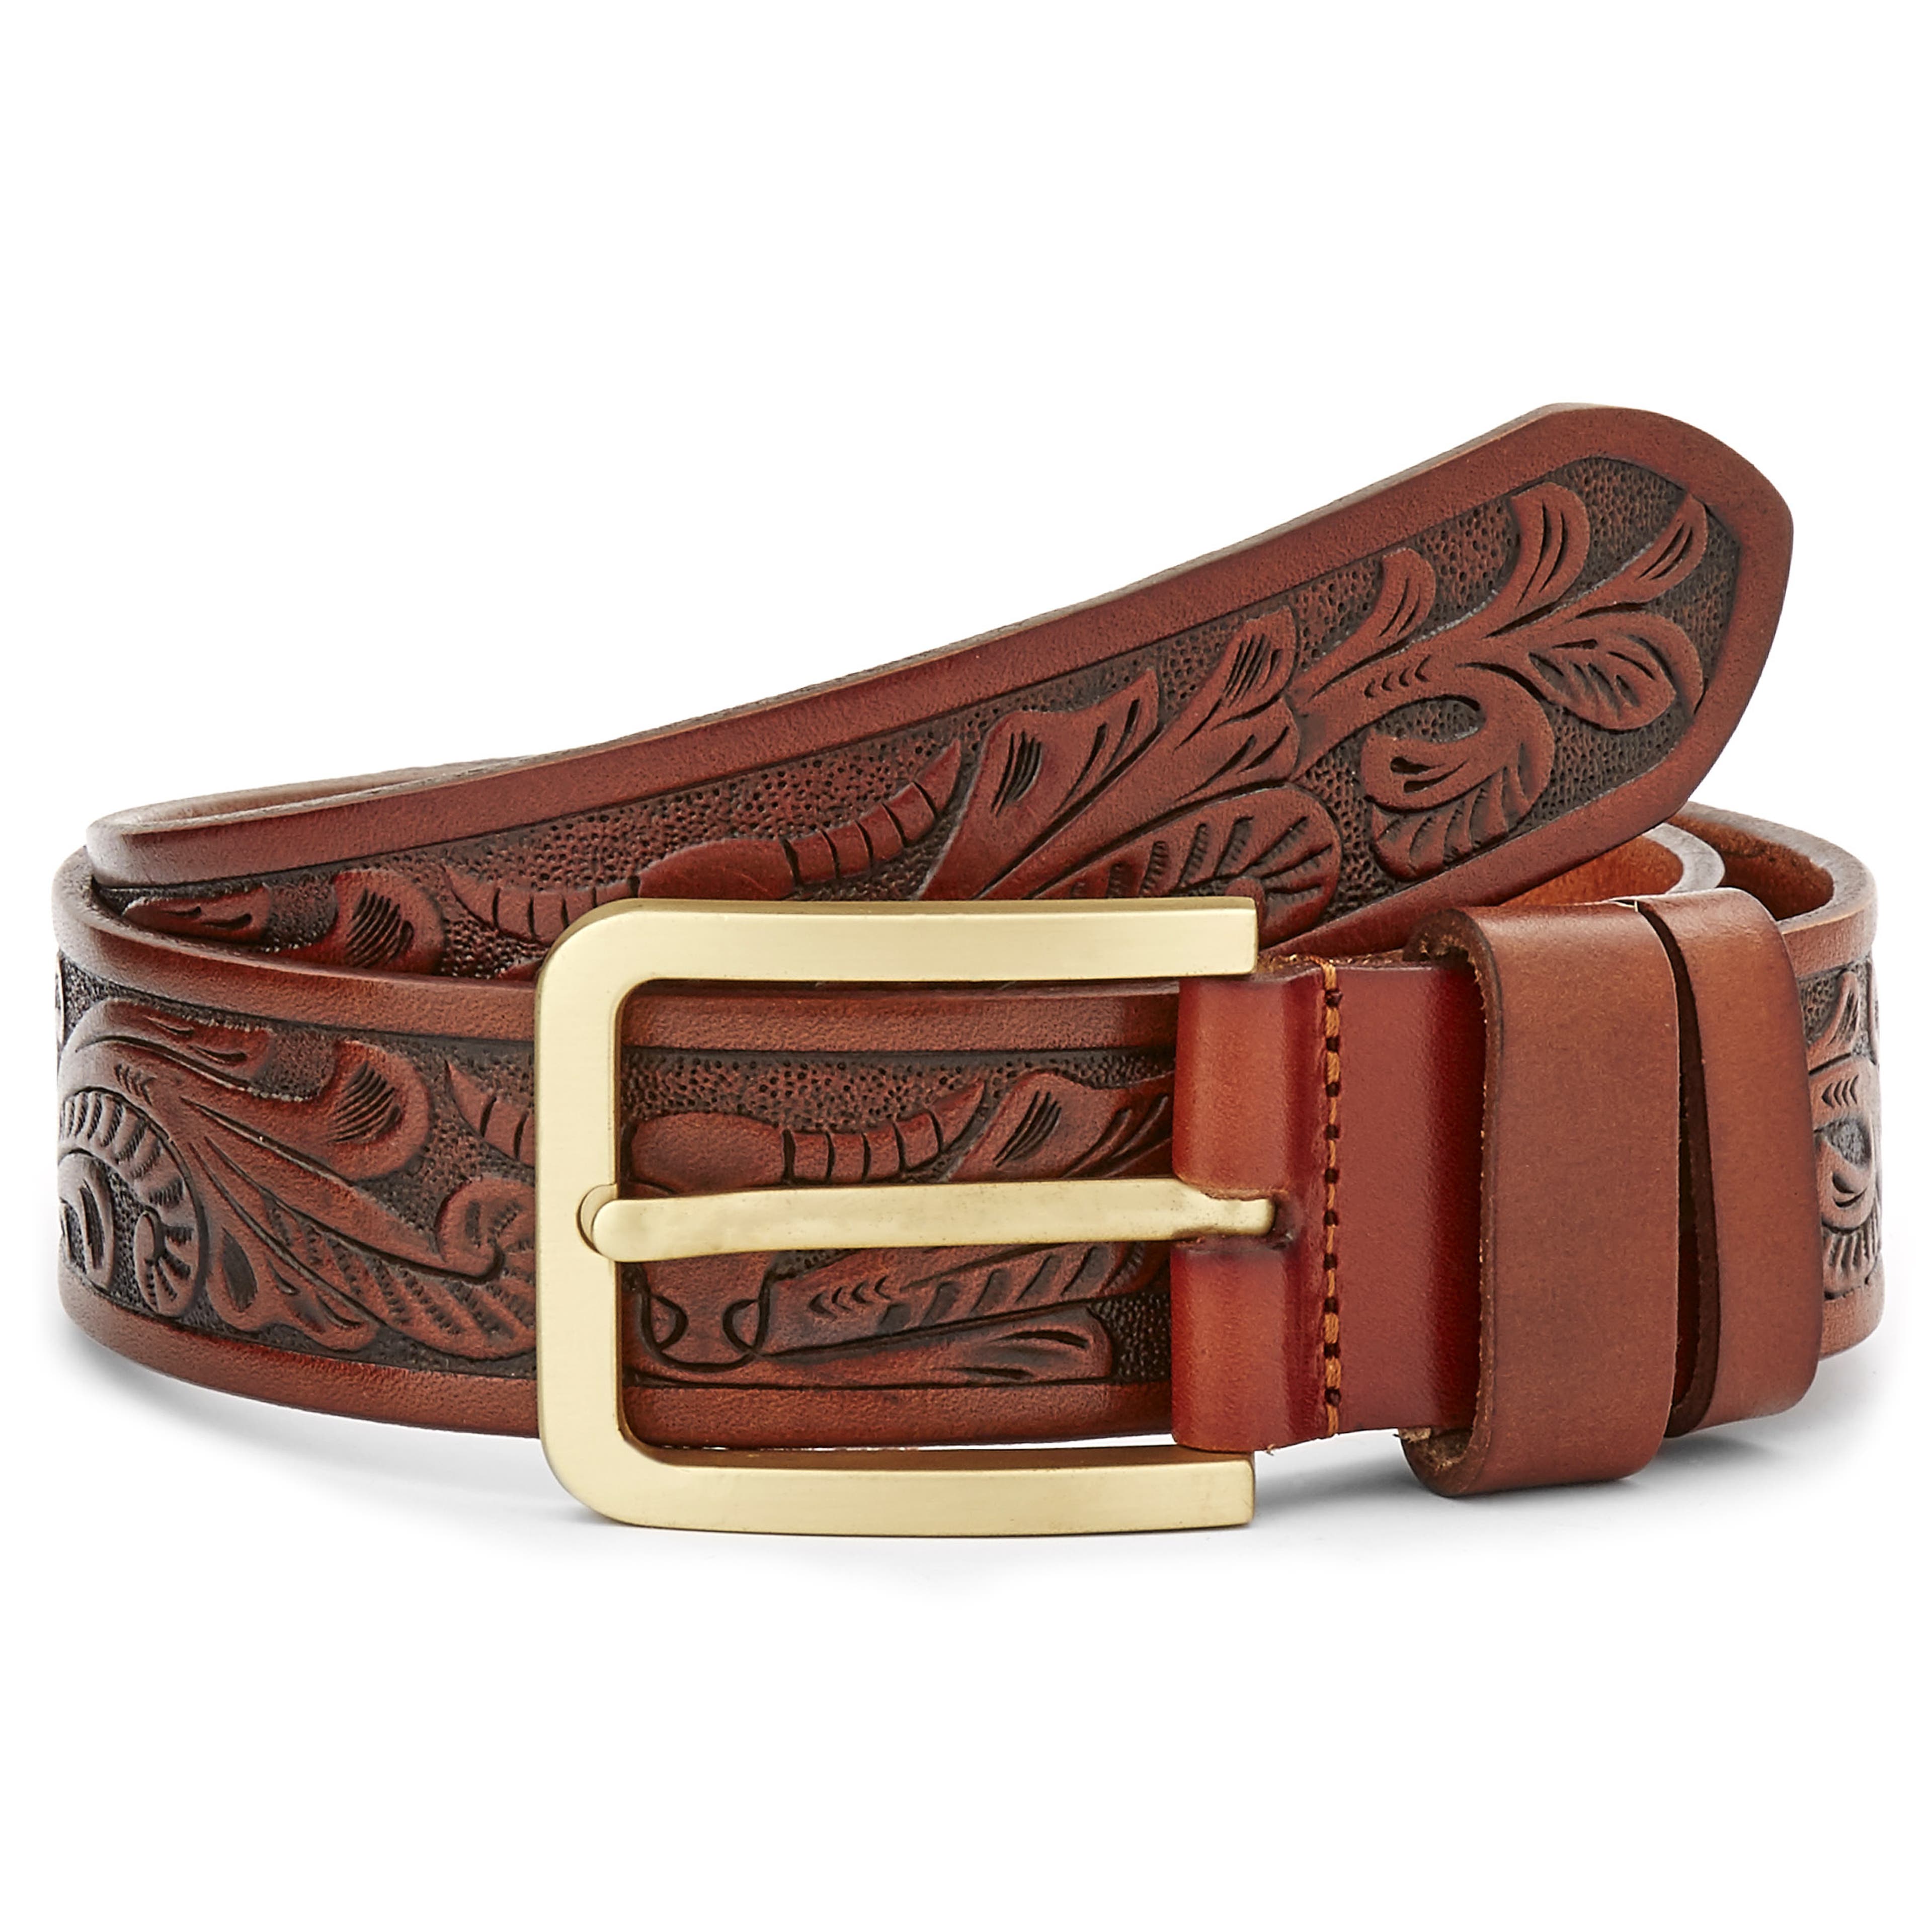 Artistic Reddish Brown Leather Belt